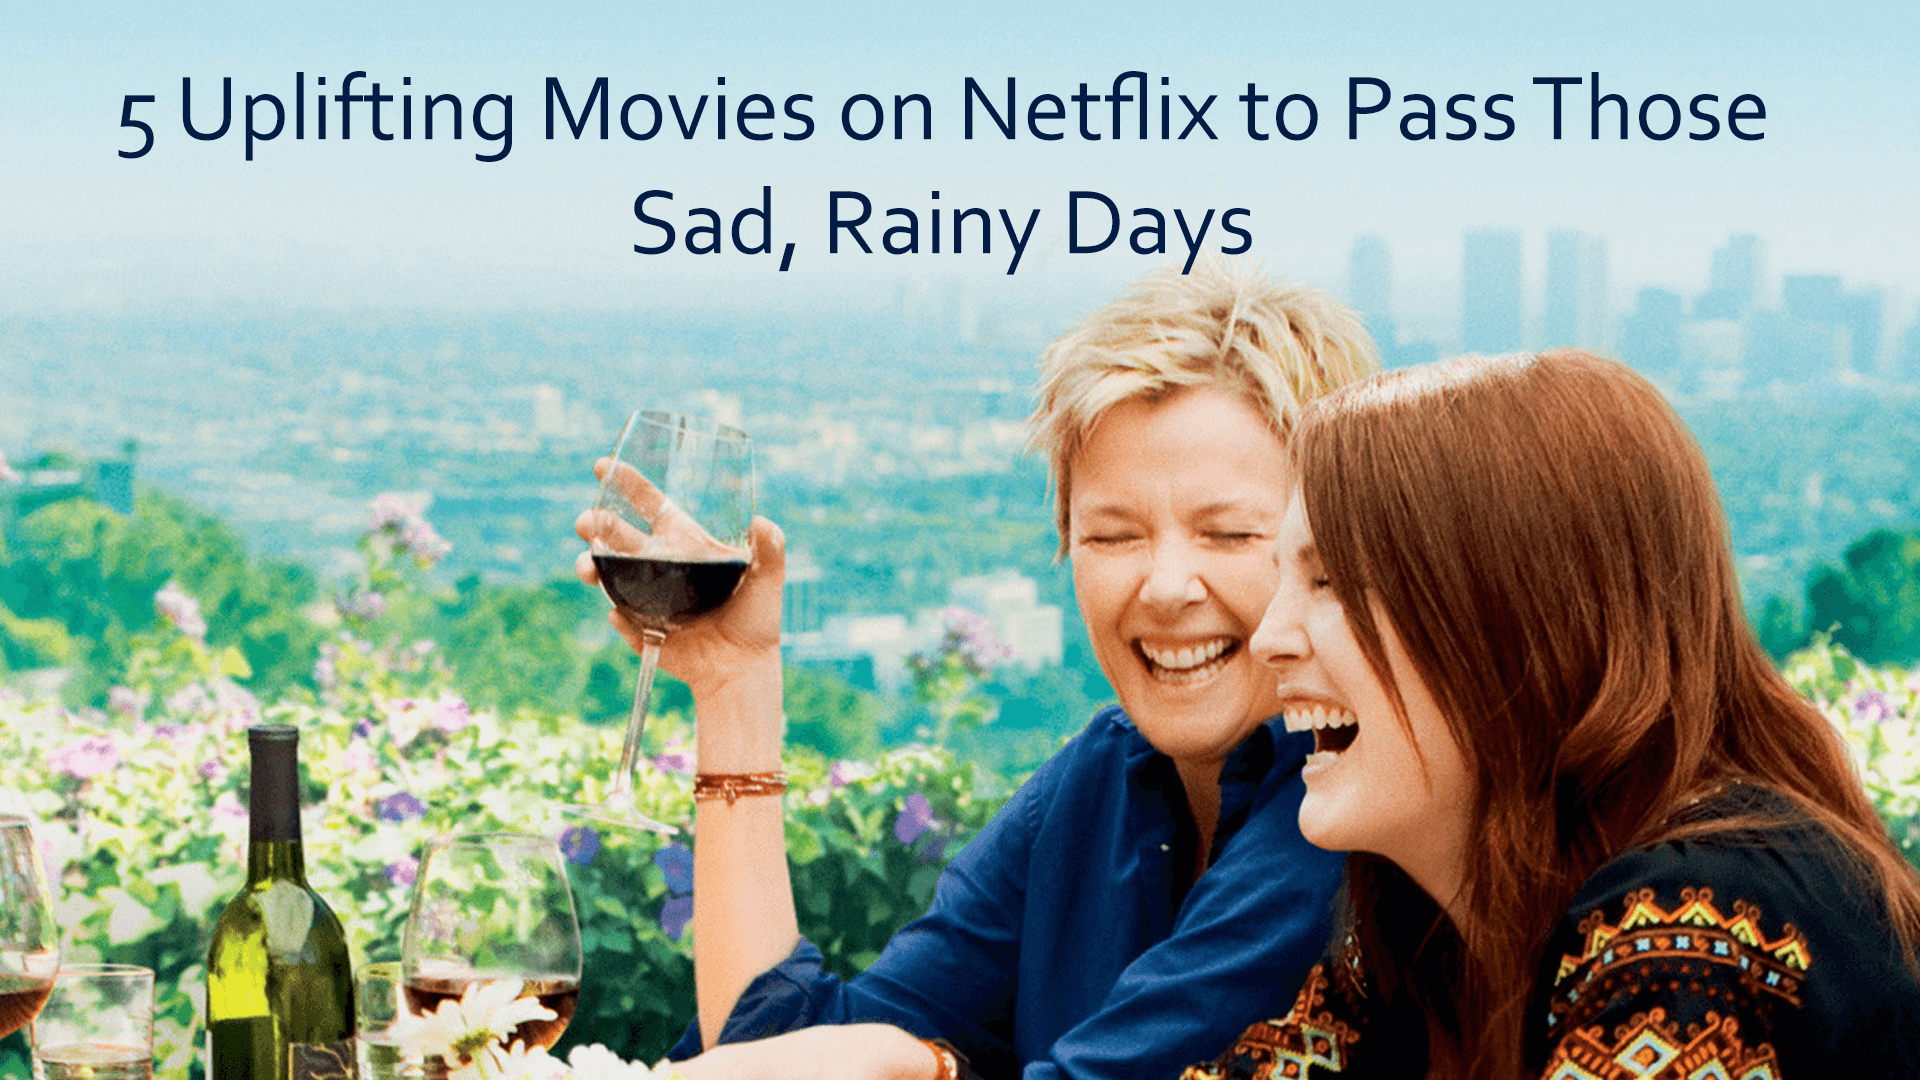 5 Uplifting Movies on Netflix to Pass Those Sad, Rainy Days